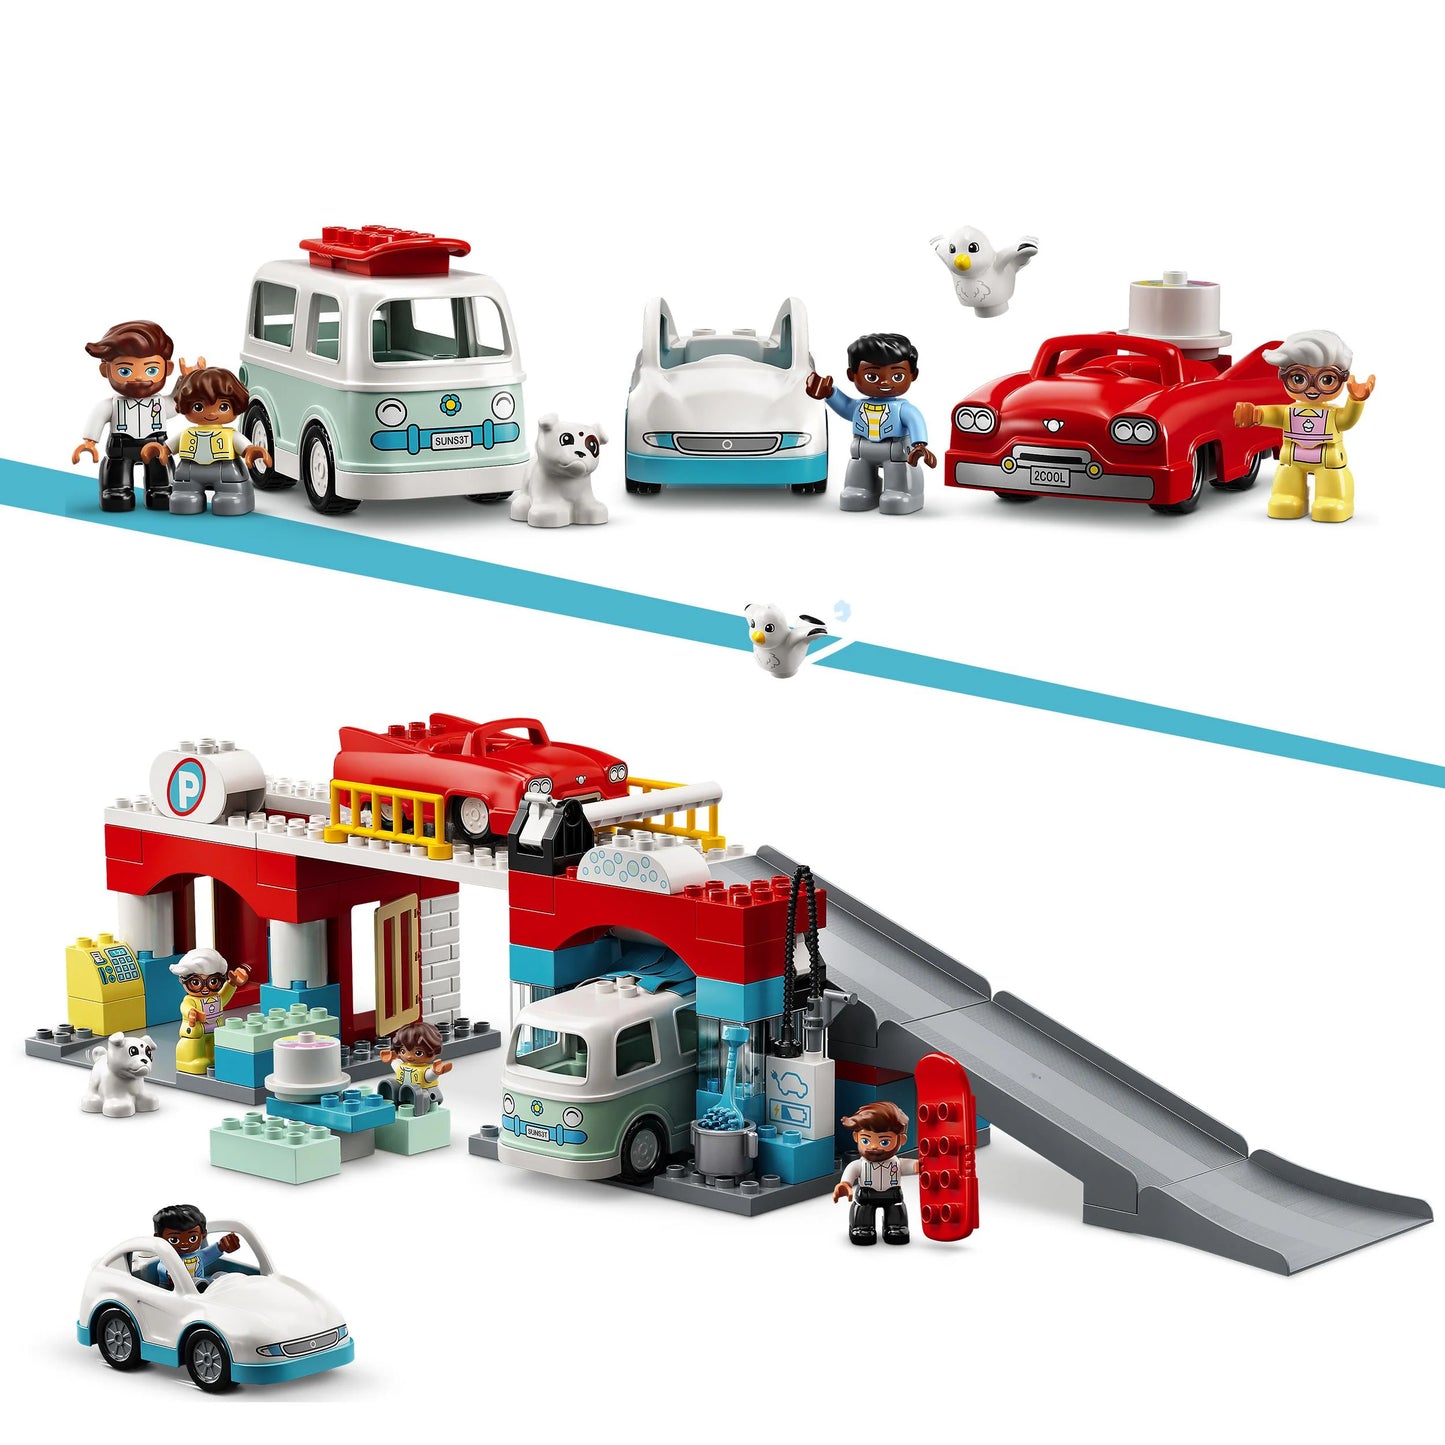 Parking garage and car wash - LEGO Duplo